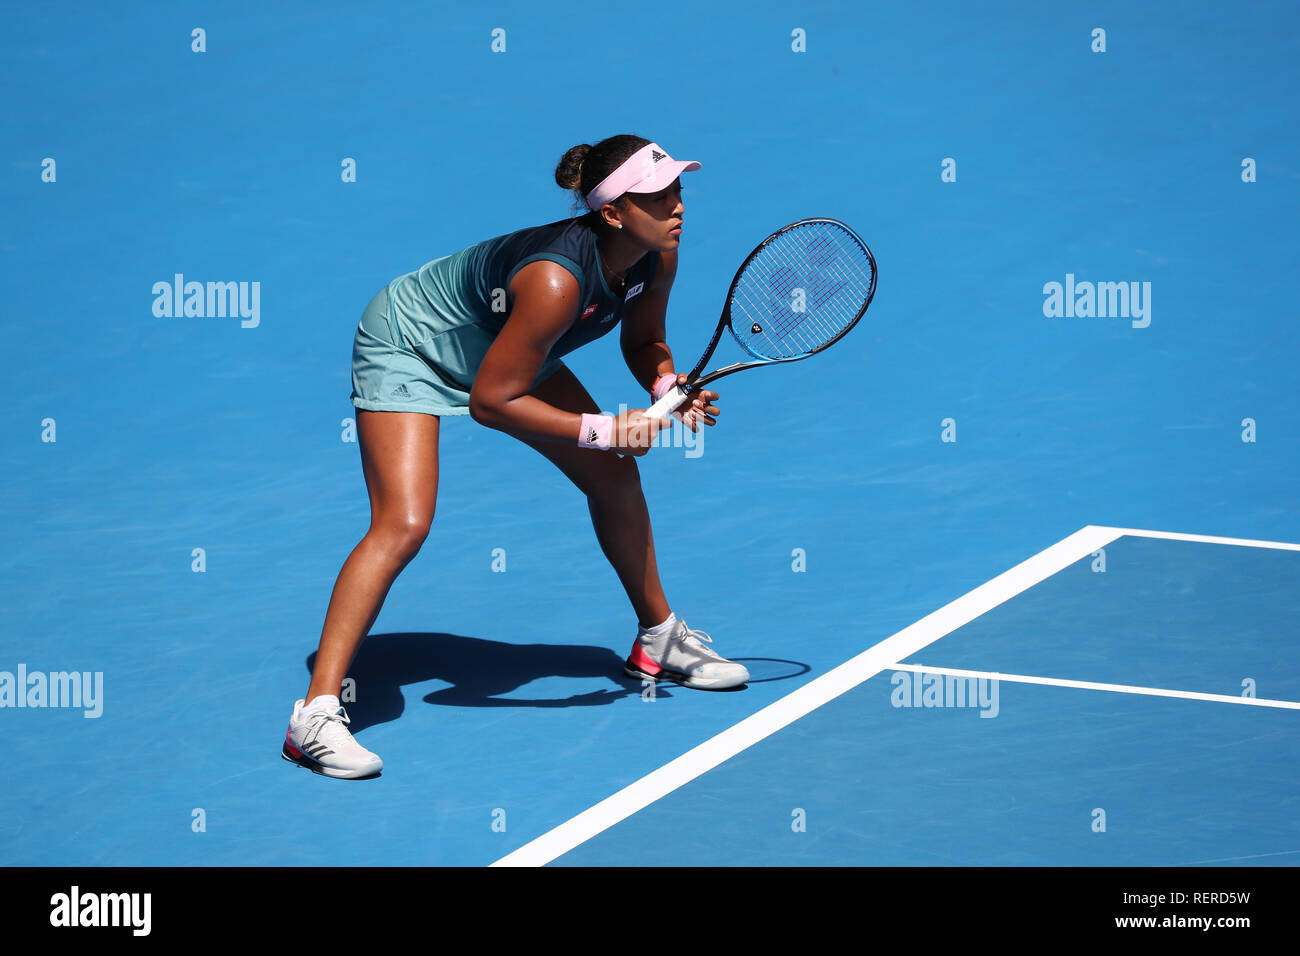 PHOTOS: Naomi Osaka Butterfly Encounter at Australian Open